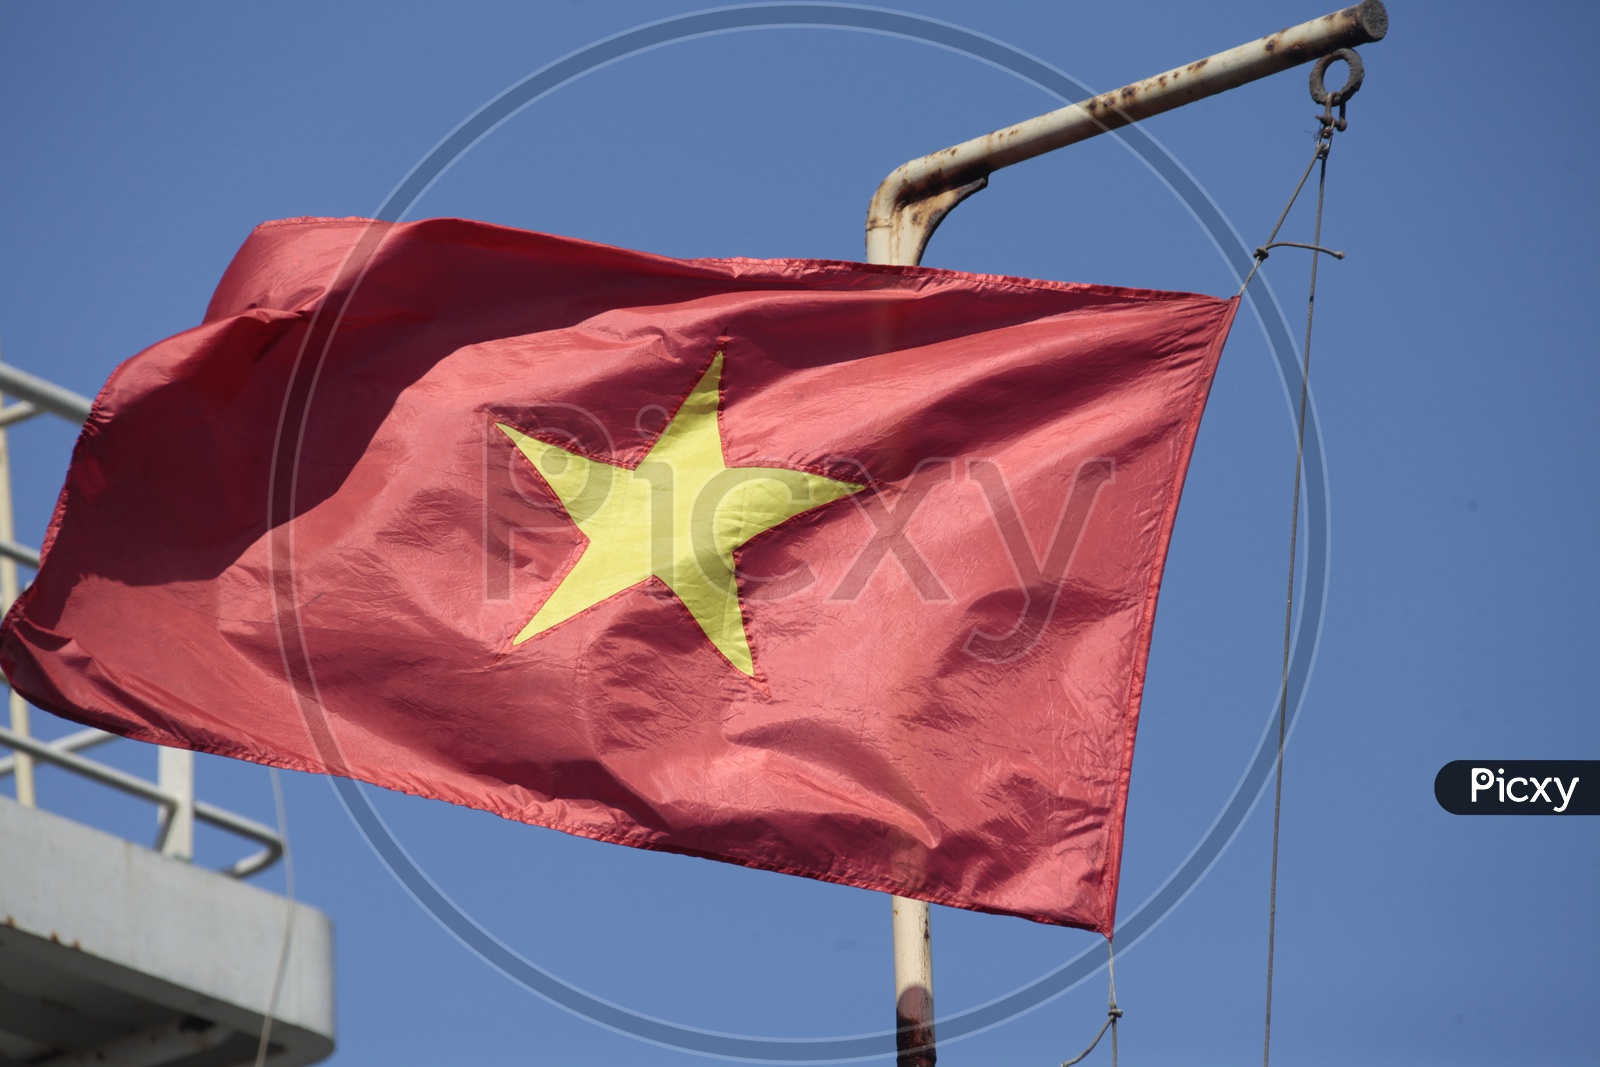 Flag Of Vietnam